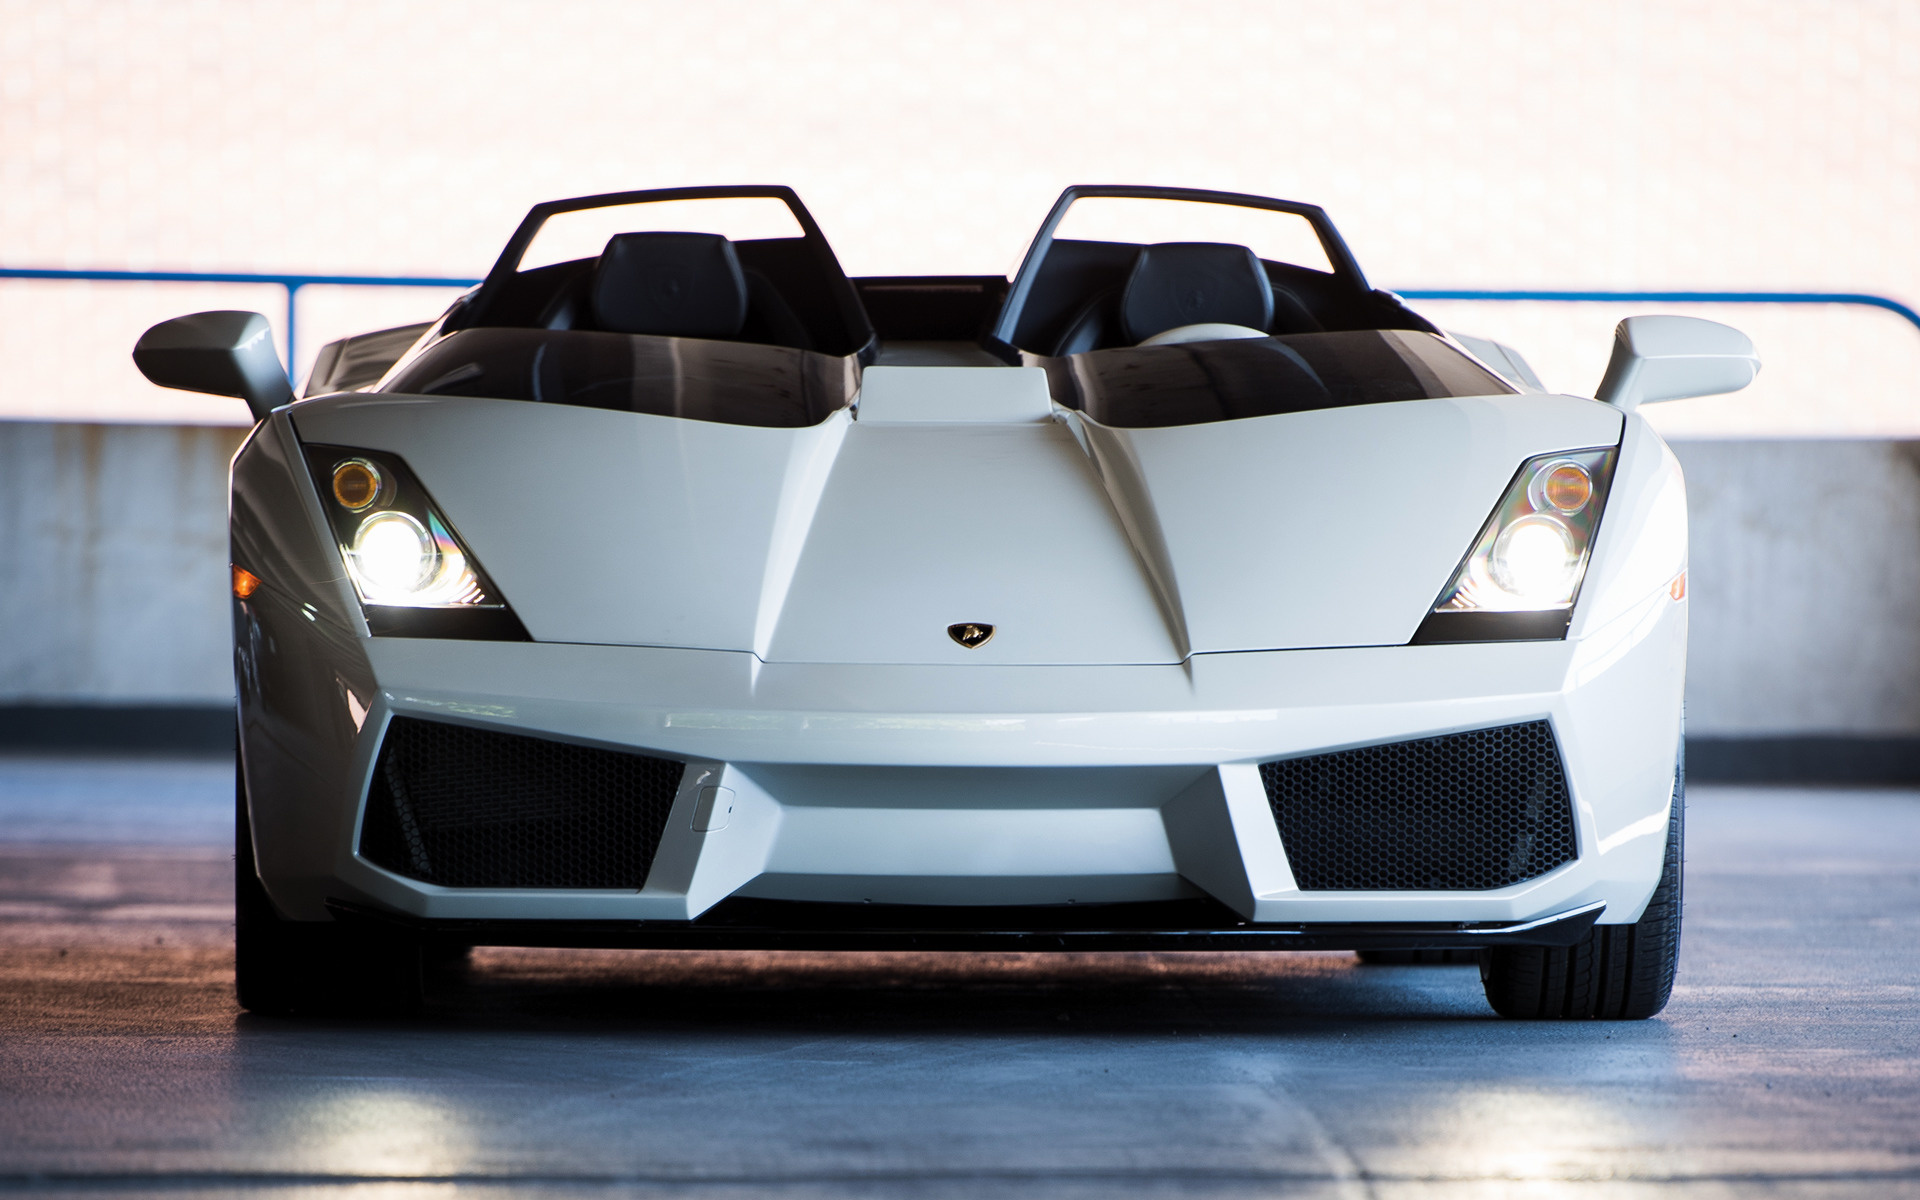 2005 Lamborghini Concept S - Wallpapers and HD Images | Car Pixel